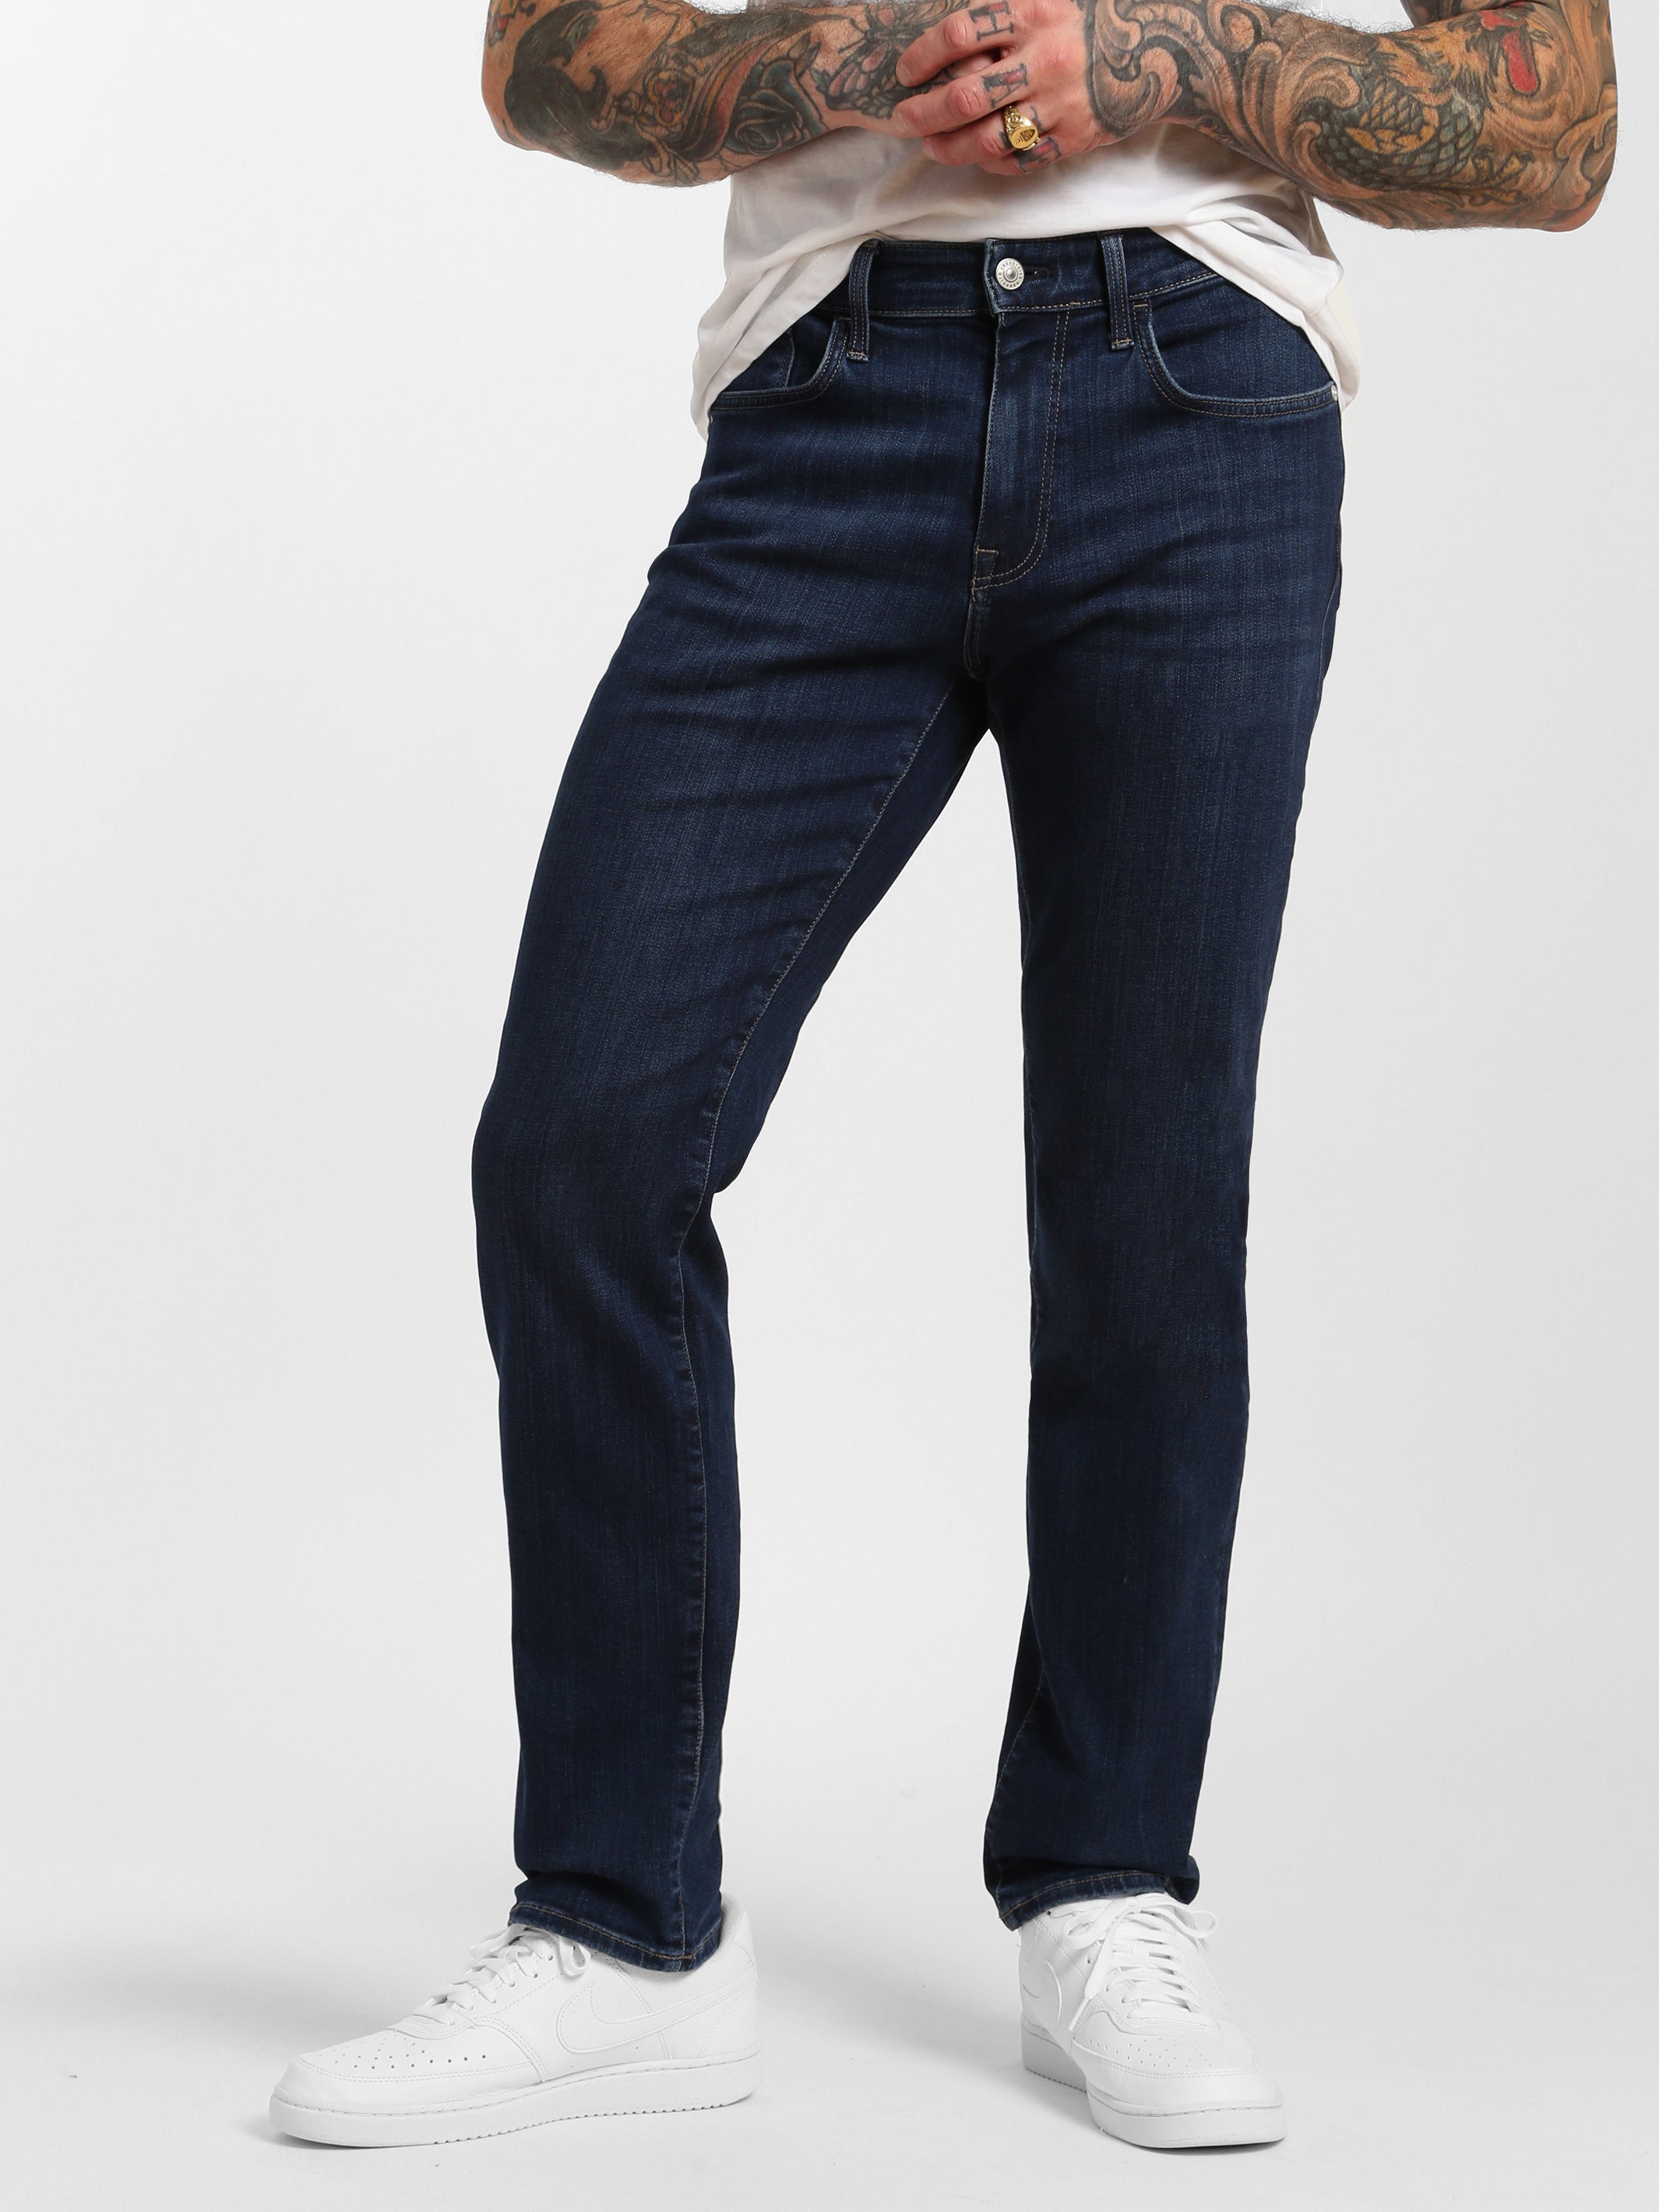 Franklin Athletic Fit Jeans in Dark Denim - BROOKLYN INDUSTRIES